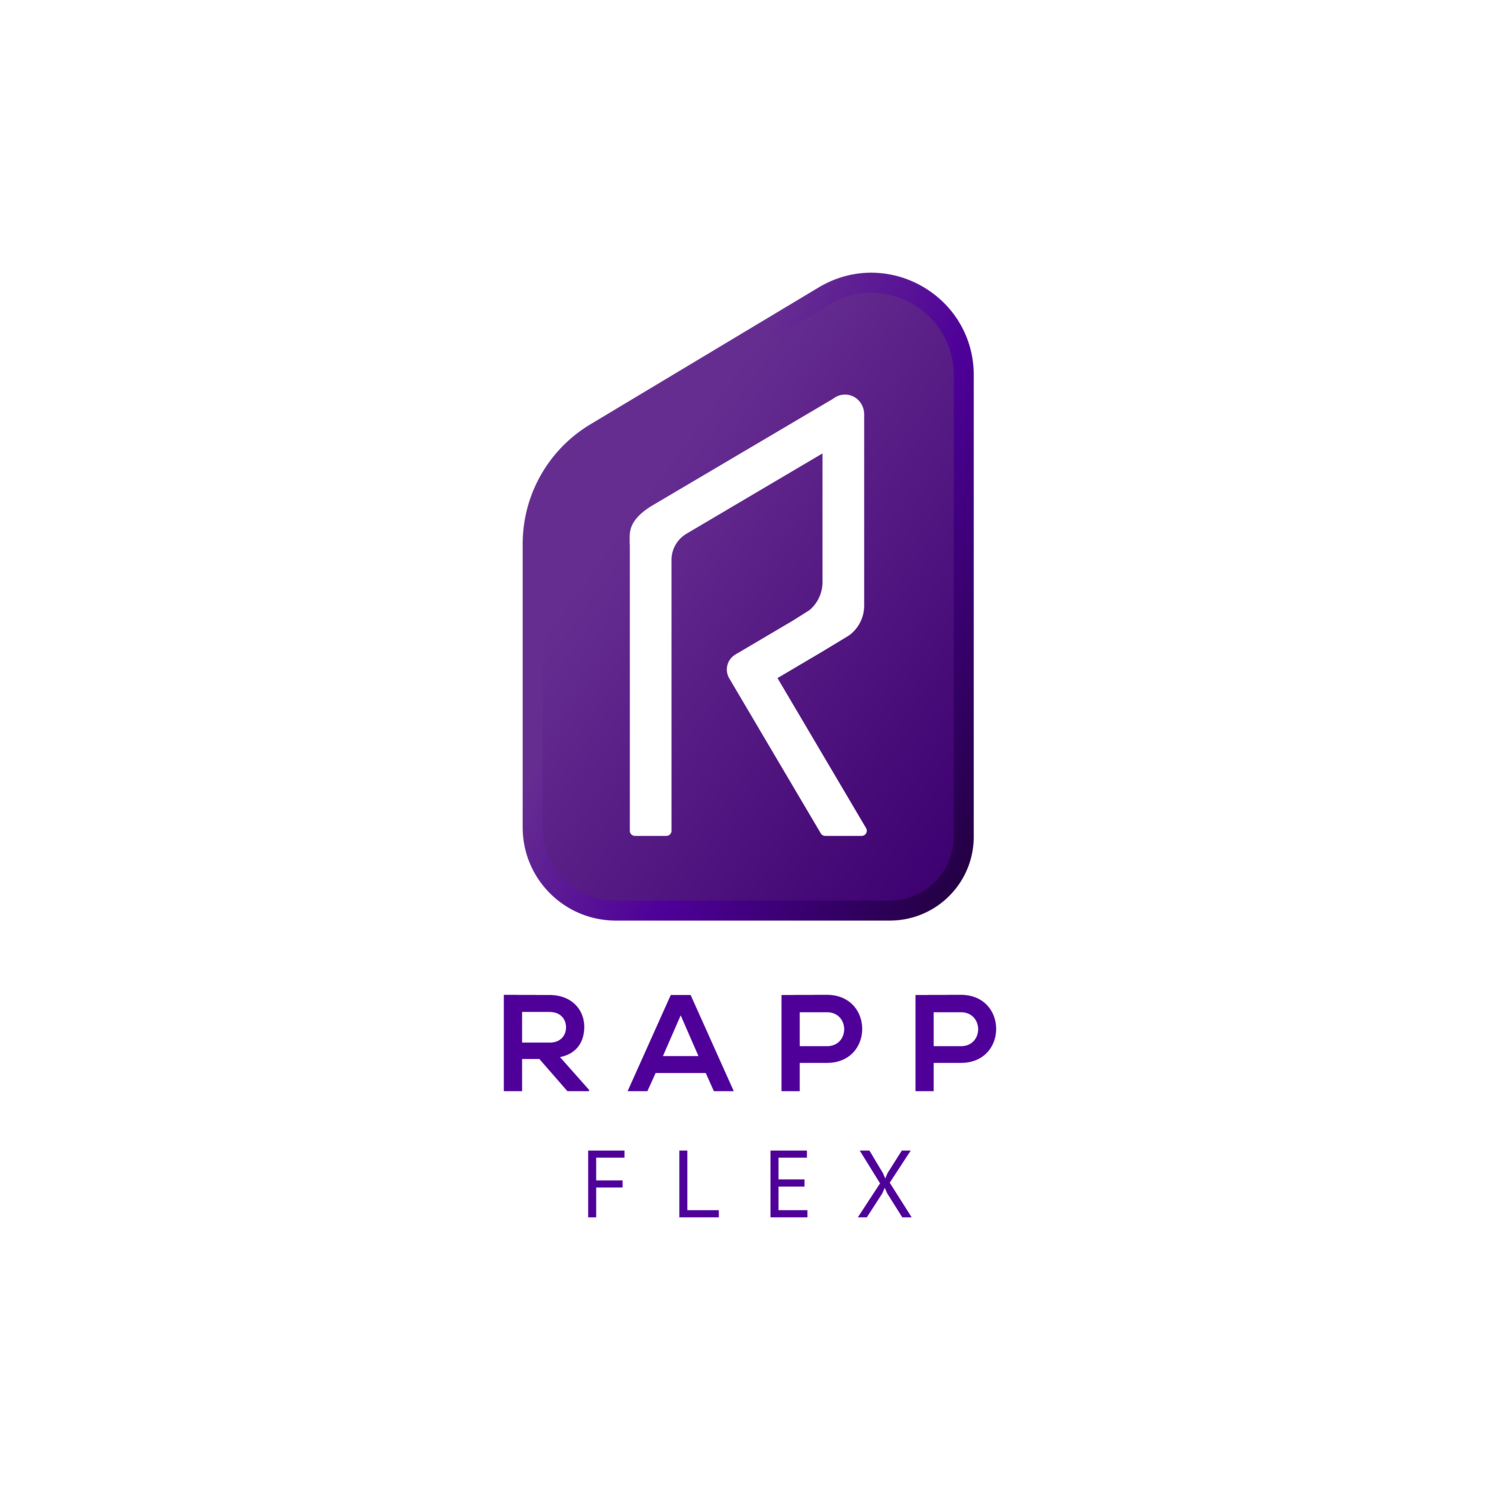 Rappflex